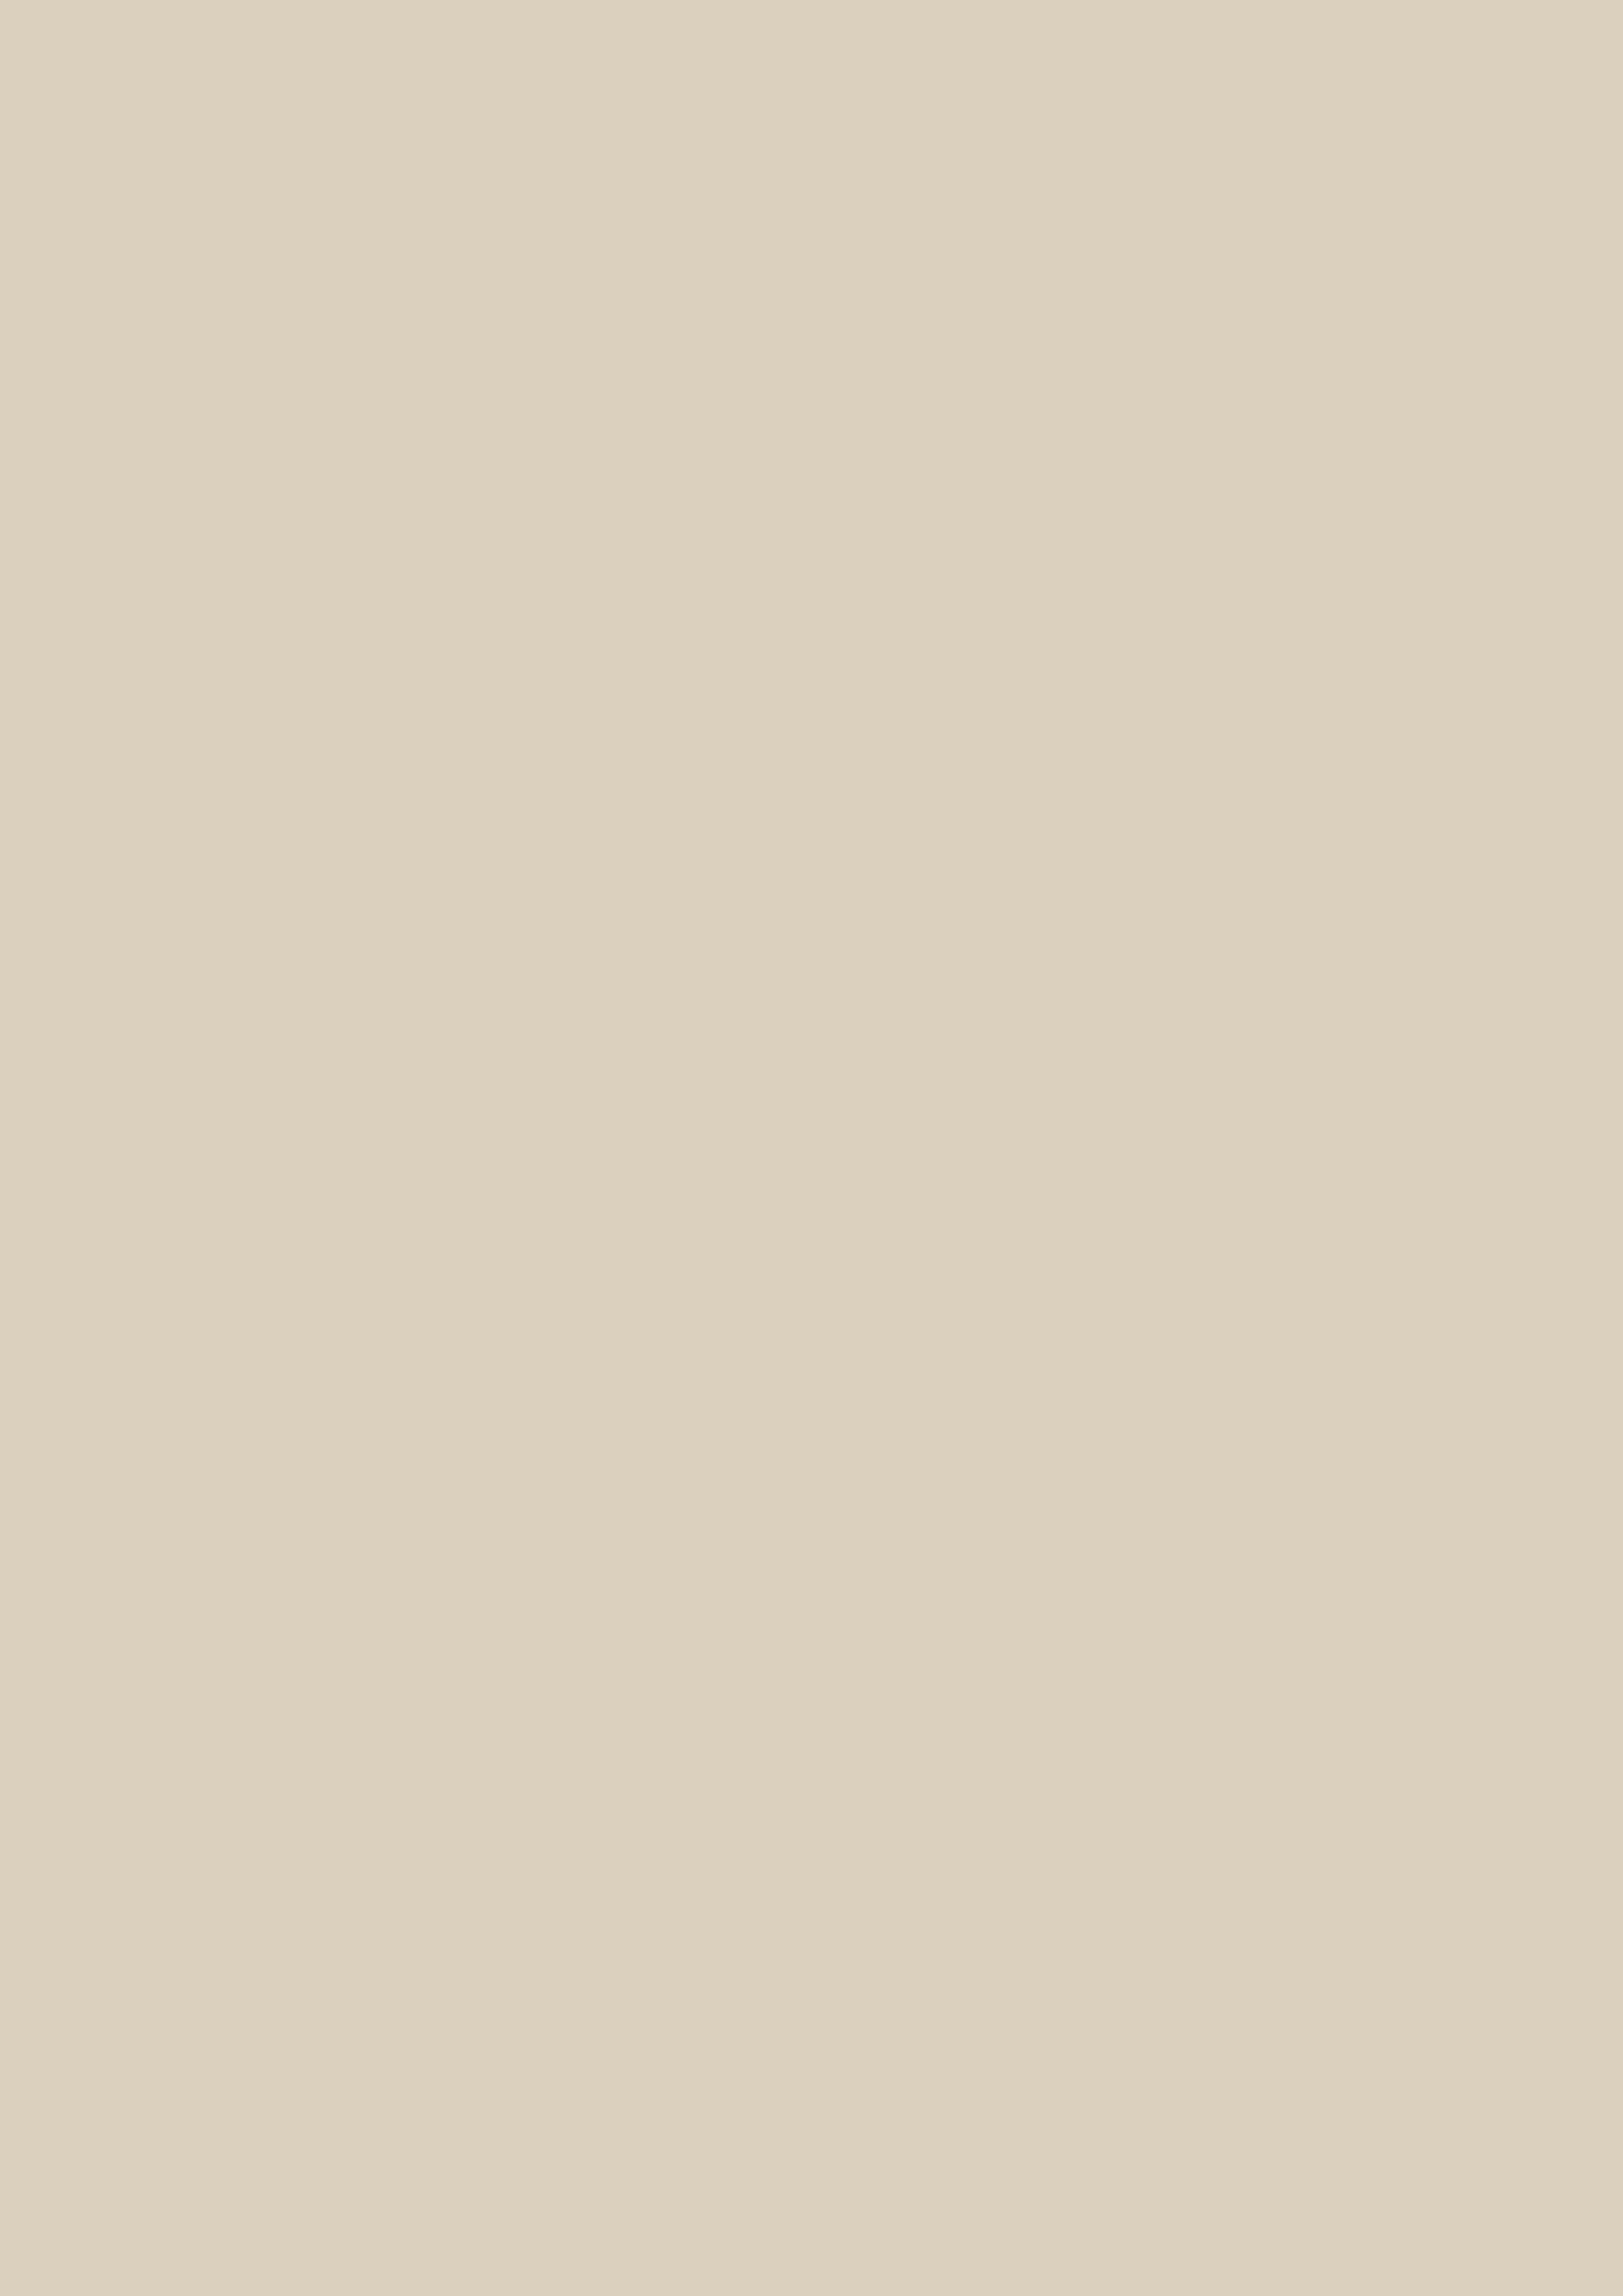 ПВХ пленка СОФТ ГРЕЙ европейского качества для мебели и дверей от компании ЛАМИС | Каталог ПВХ пленок MULTIMA by IMAWELL 